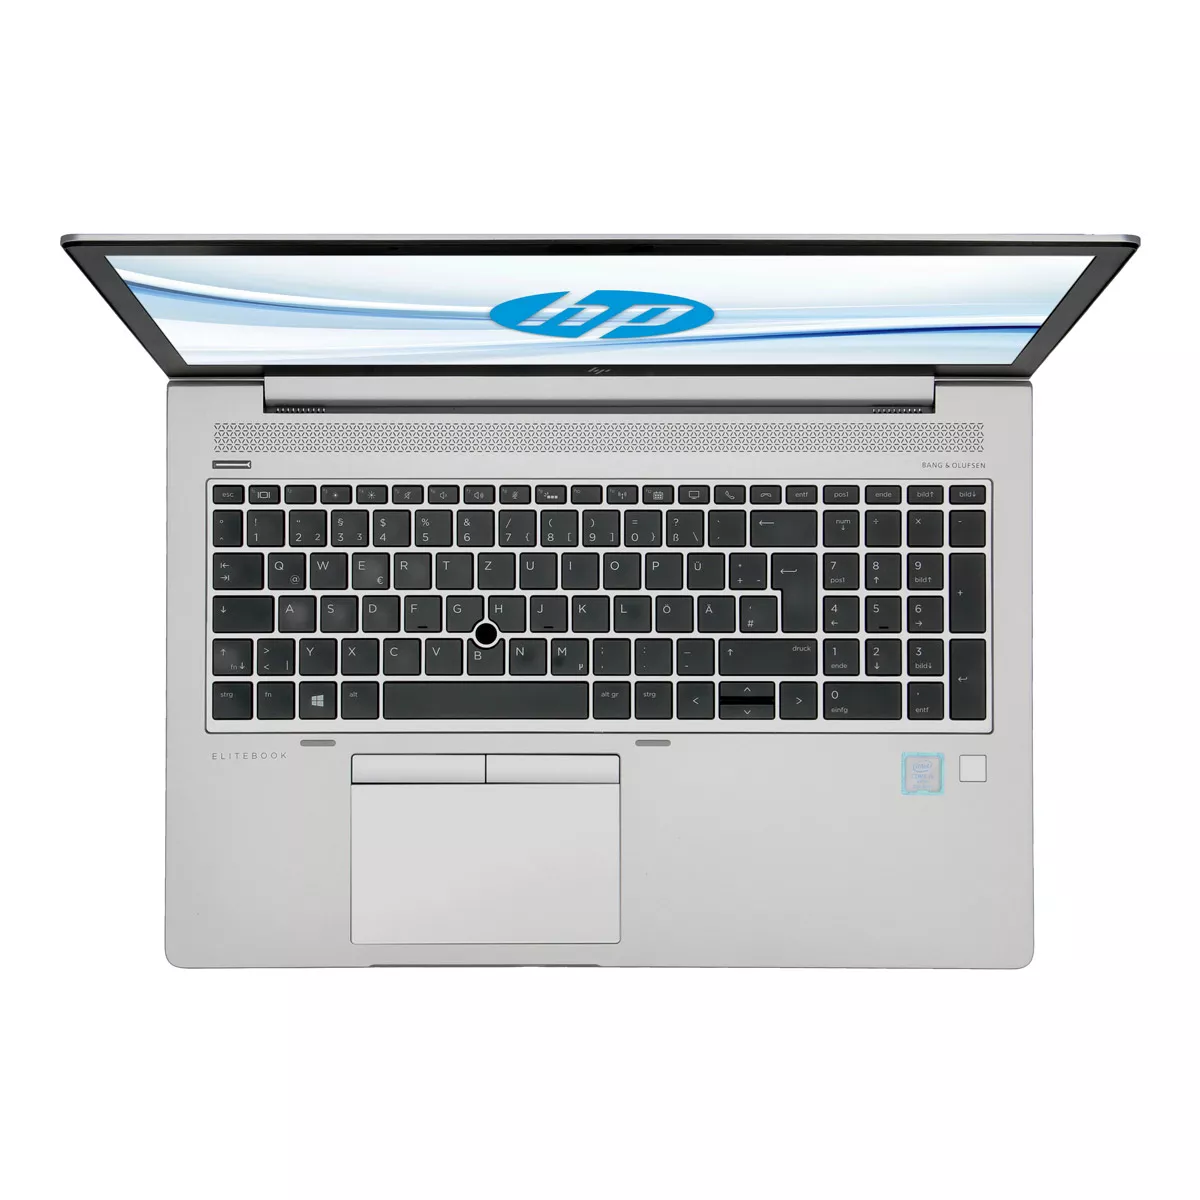 HP EliteBook 850 G5 Core i5 8250U Full-HD Touch 16 GB DDR4 240 GB M.2 nVME SSD Webcam A+